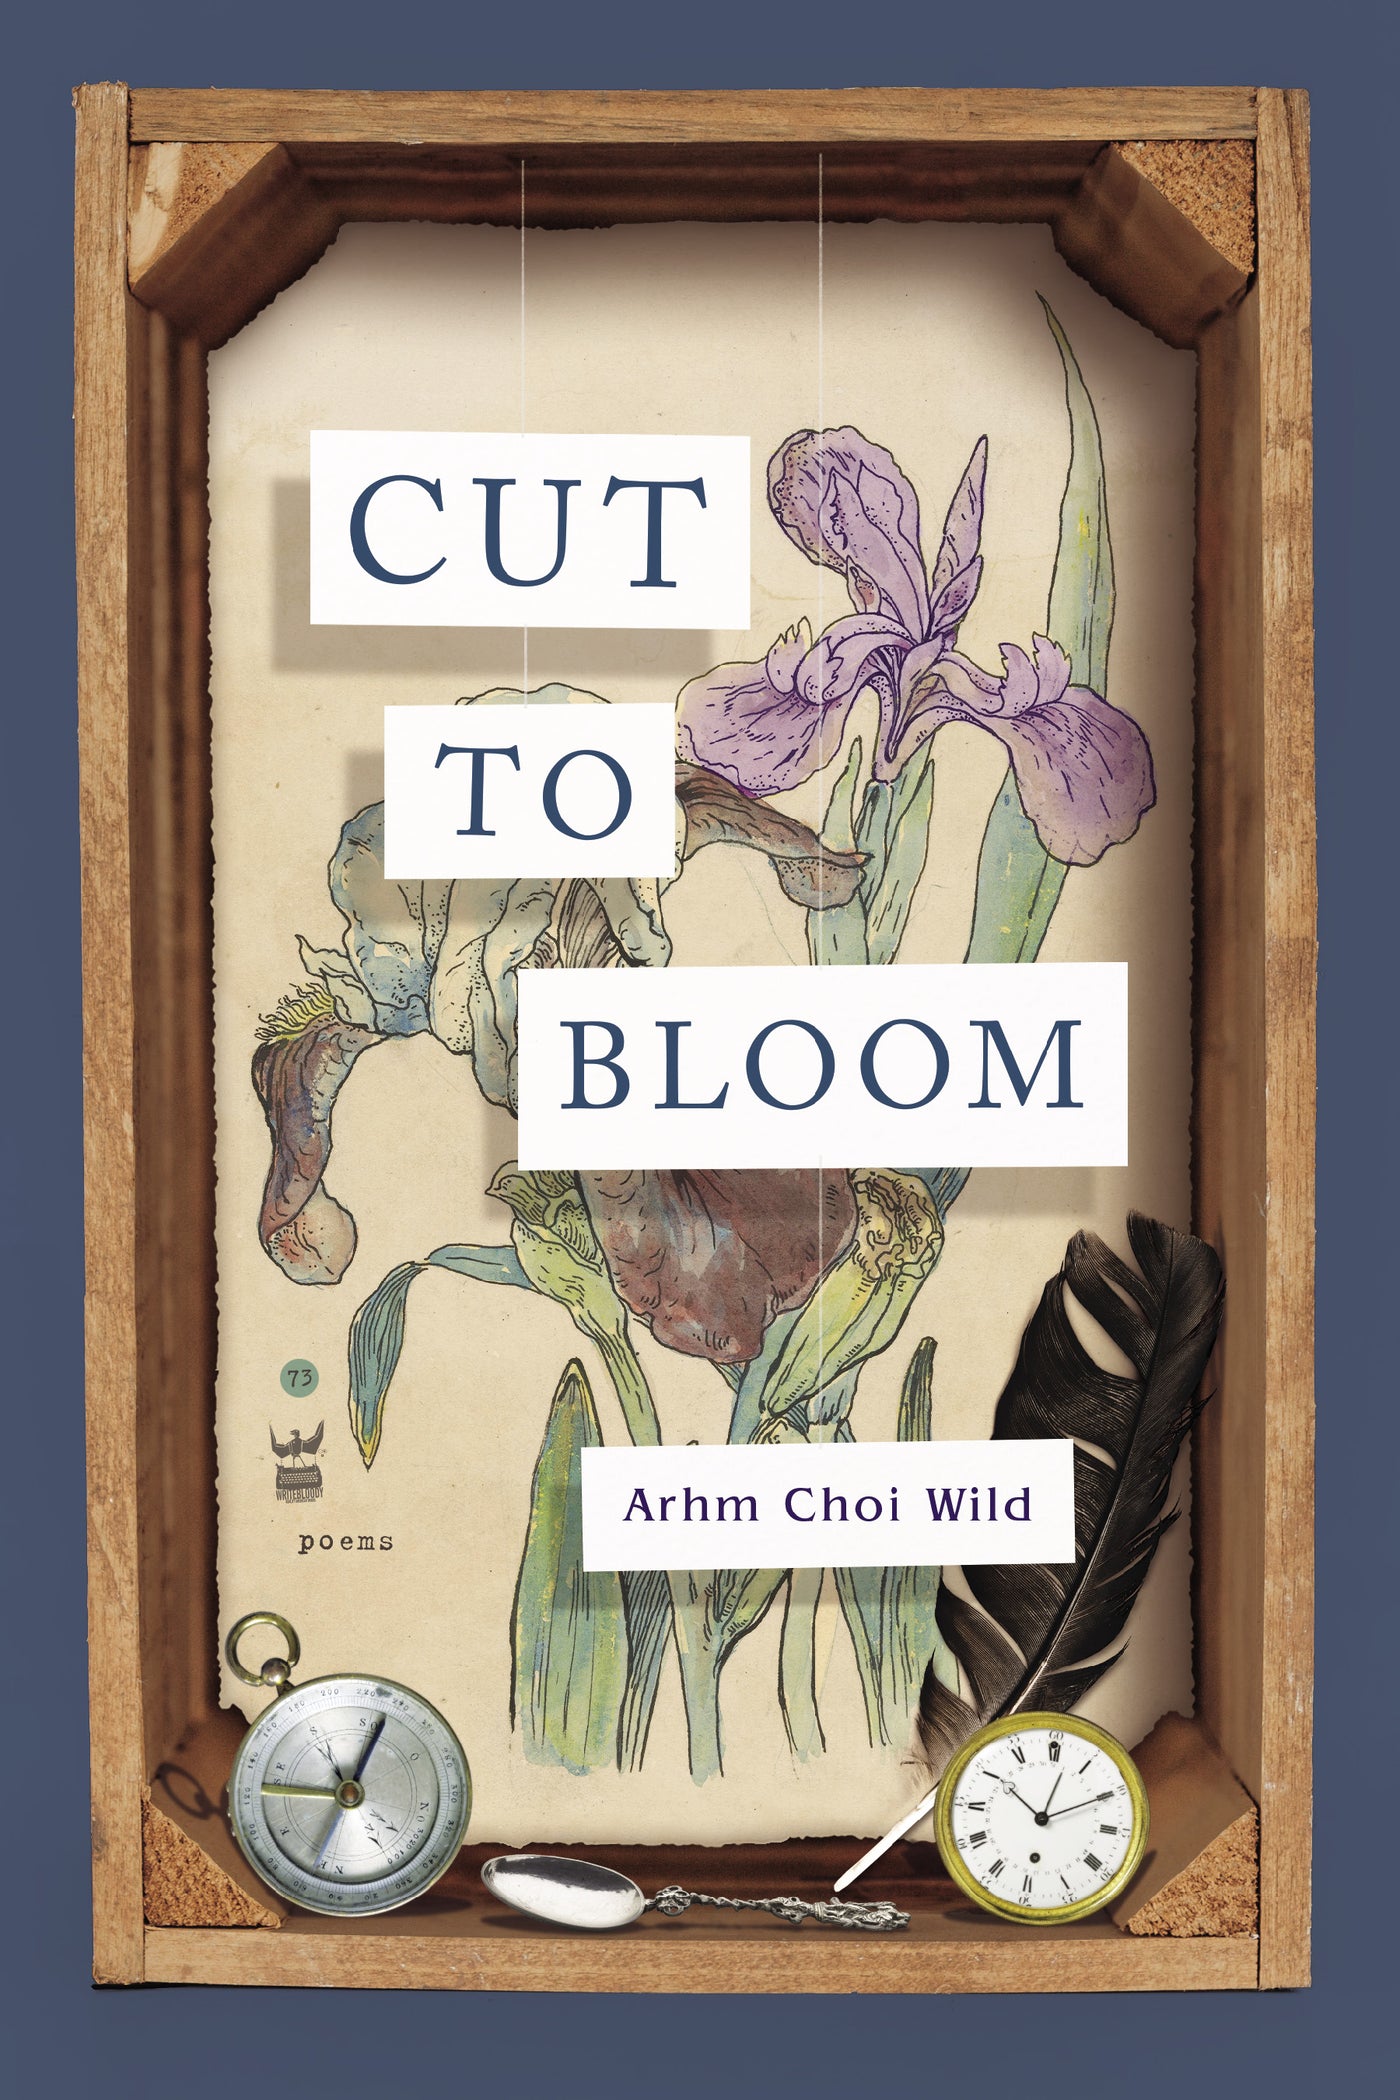 Cut to Bloom by Arhm Choi Wild